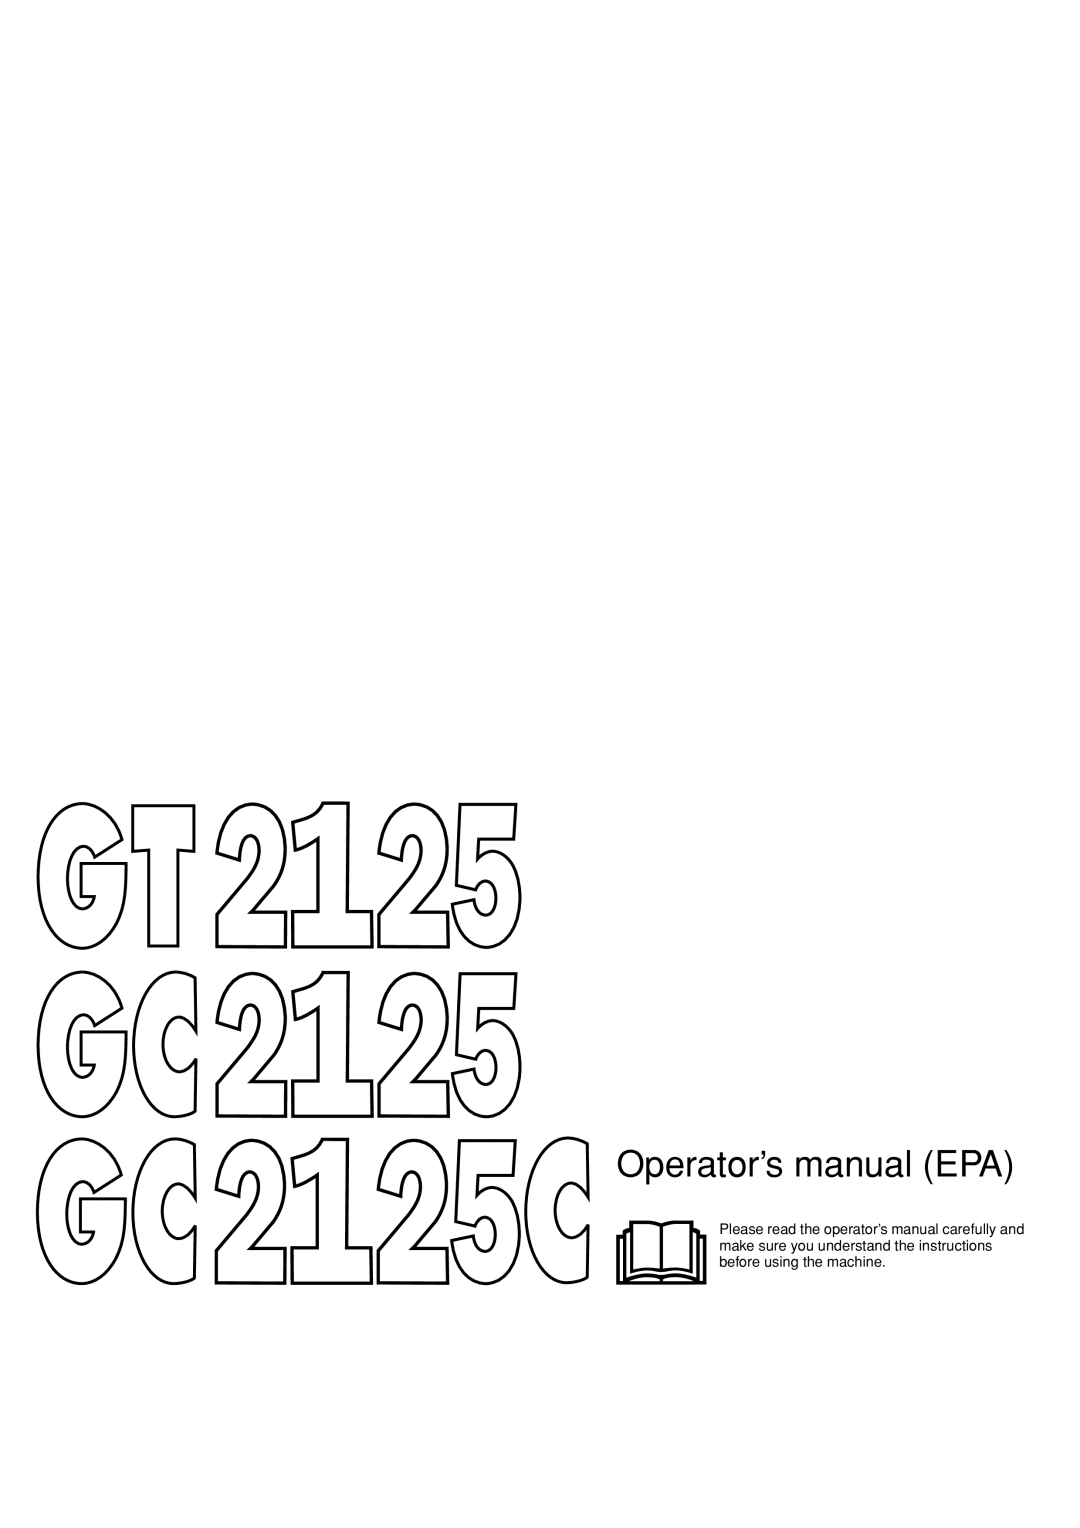 Jonsered GC 2125C manual Operator’s manual EPA 